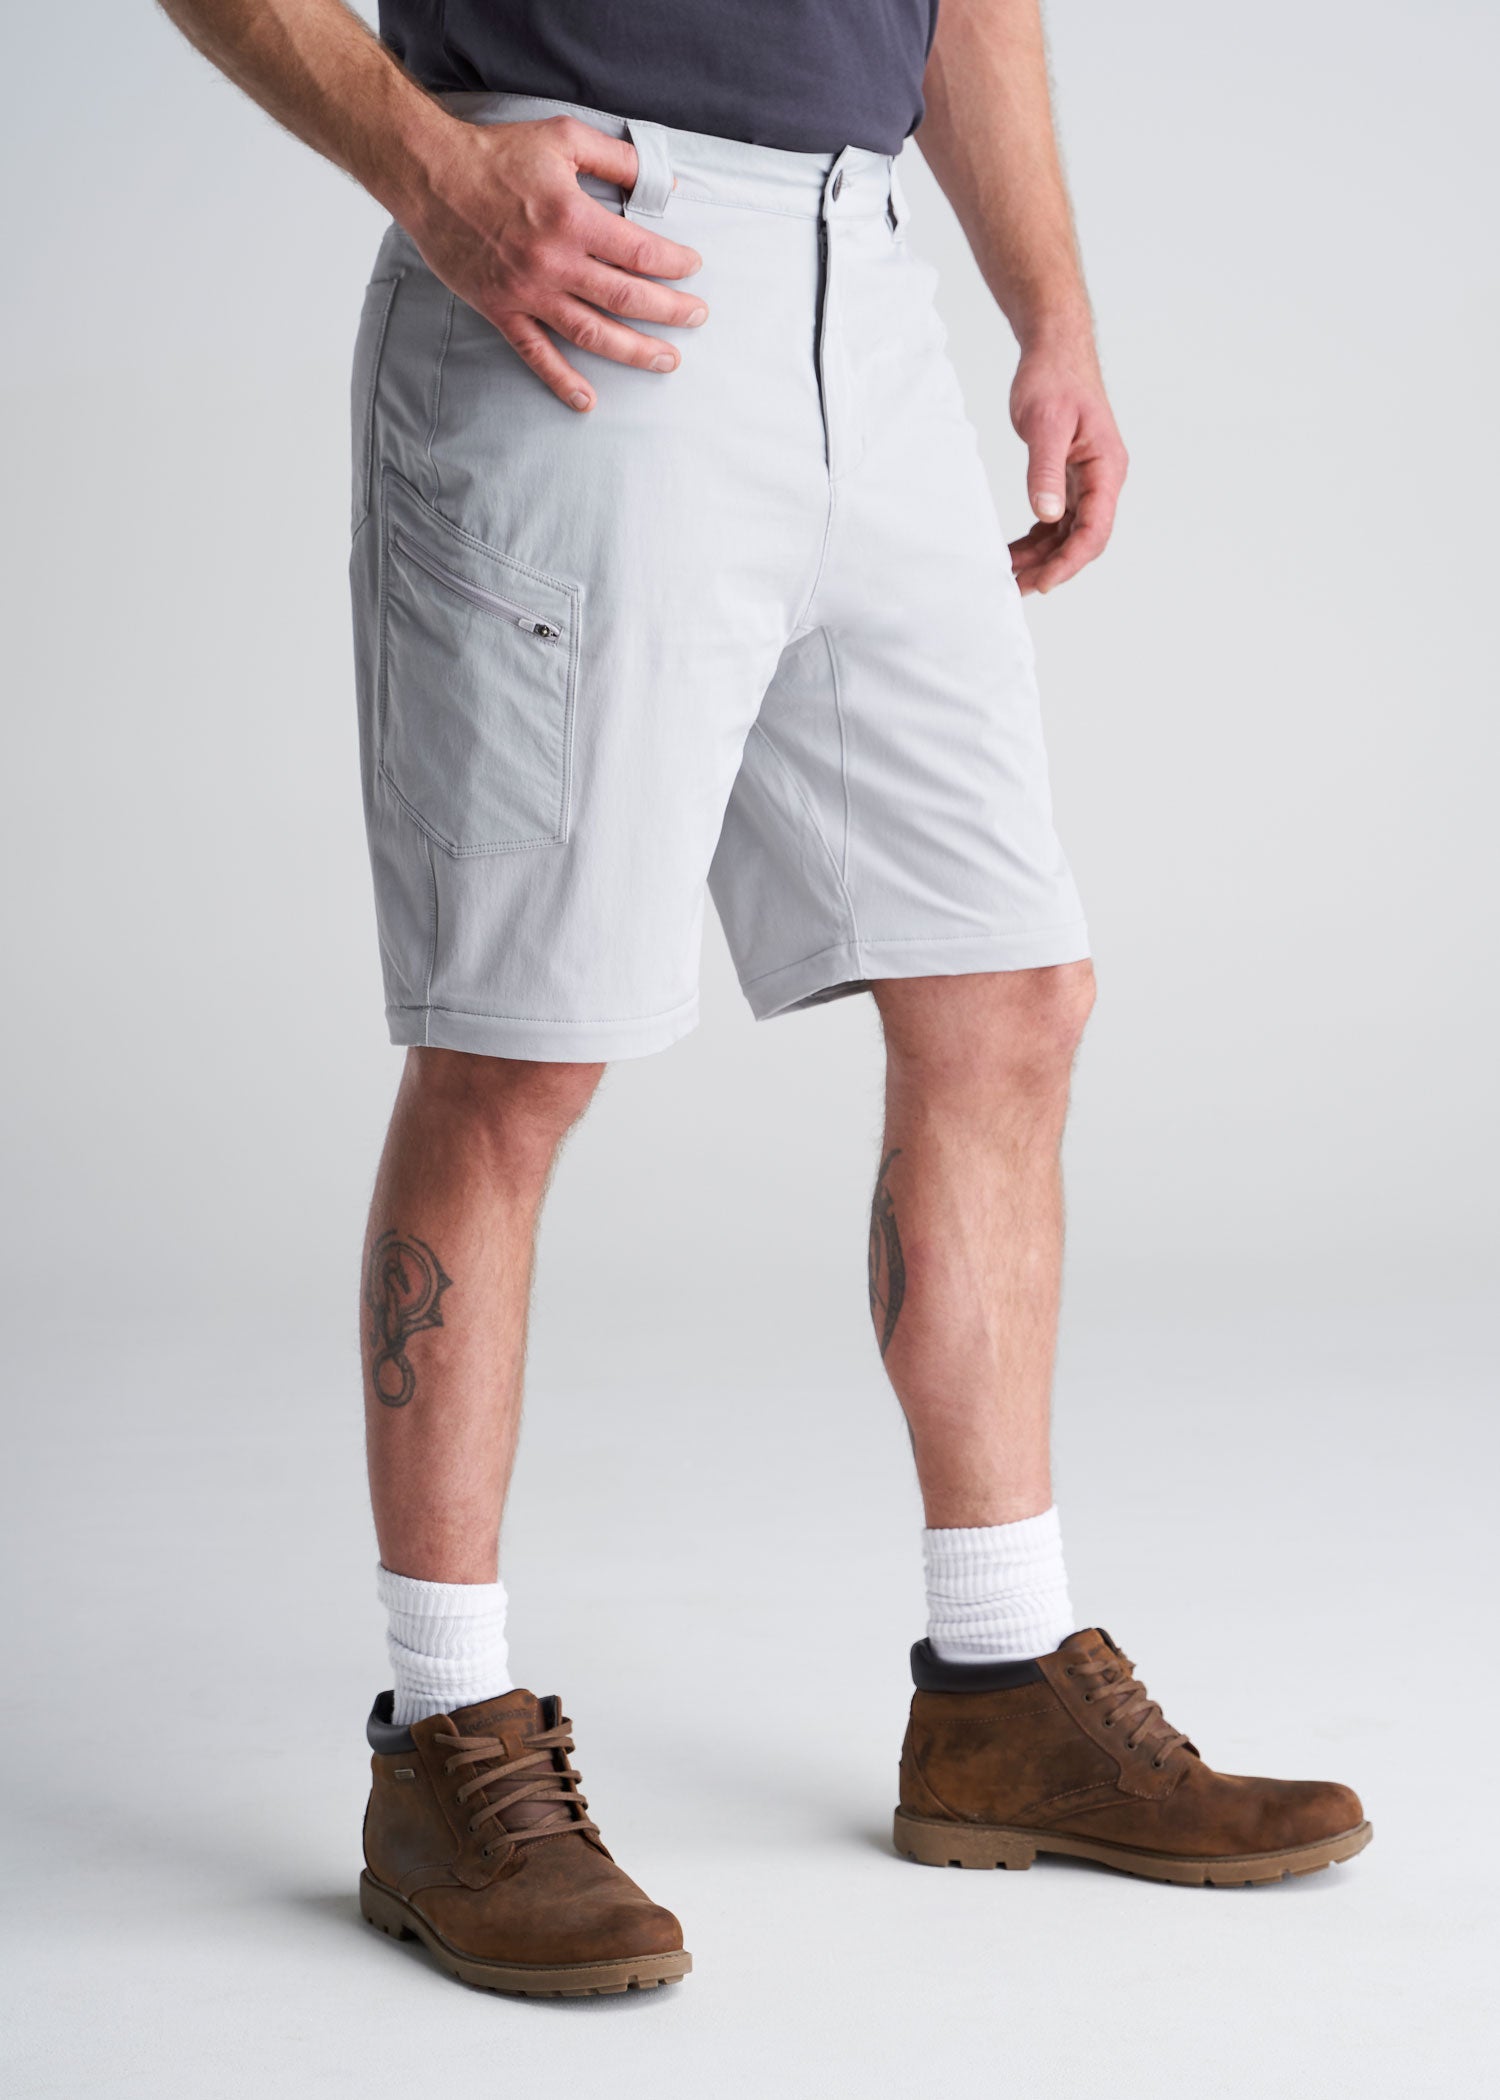 American_Tall_Mens_Hiking_Zipoff_Pant_LightGrey-shorts